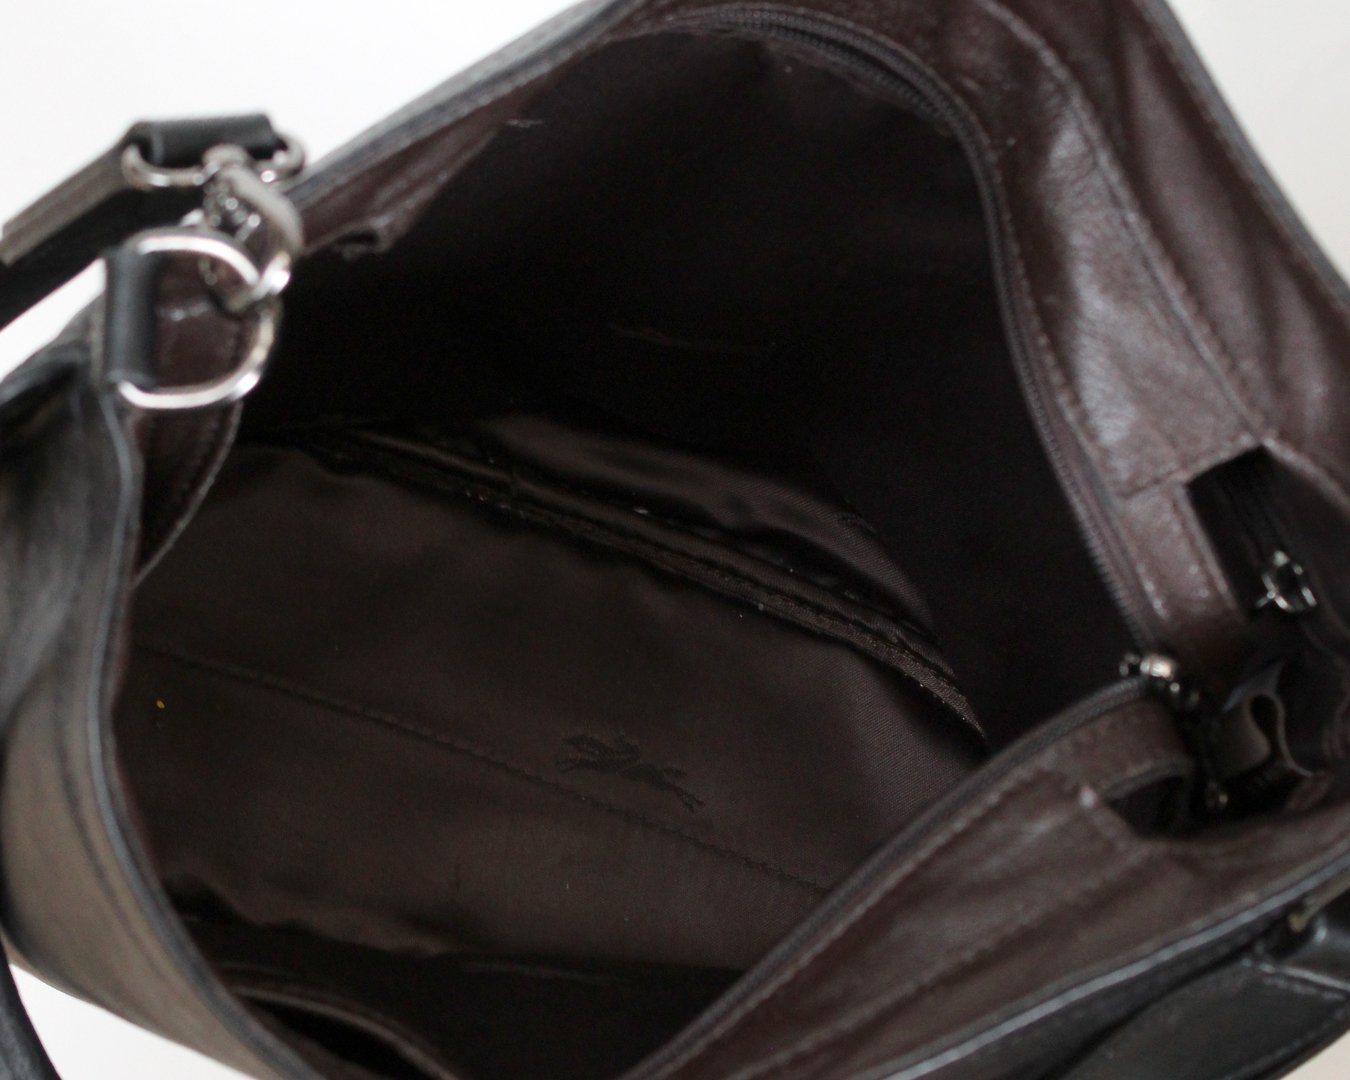 longchamp leather crossbody bag